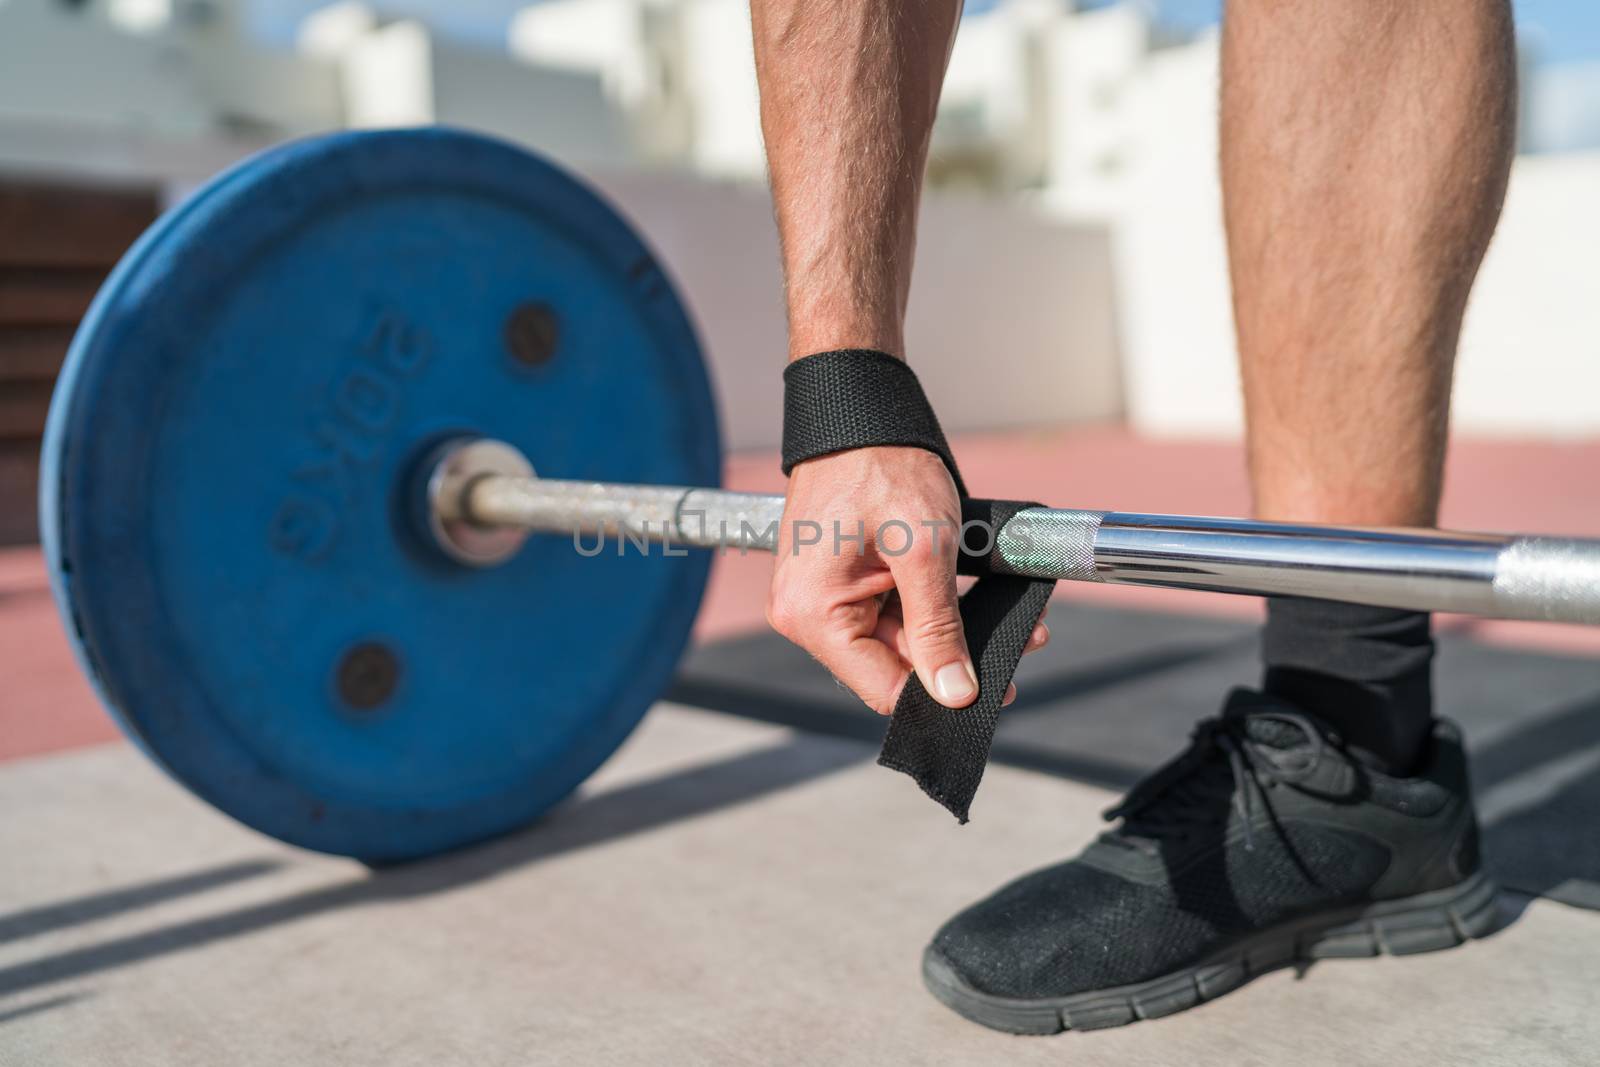 Weightlifting wrist straps fitness man by Maridav